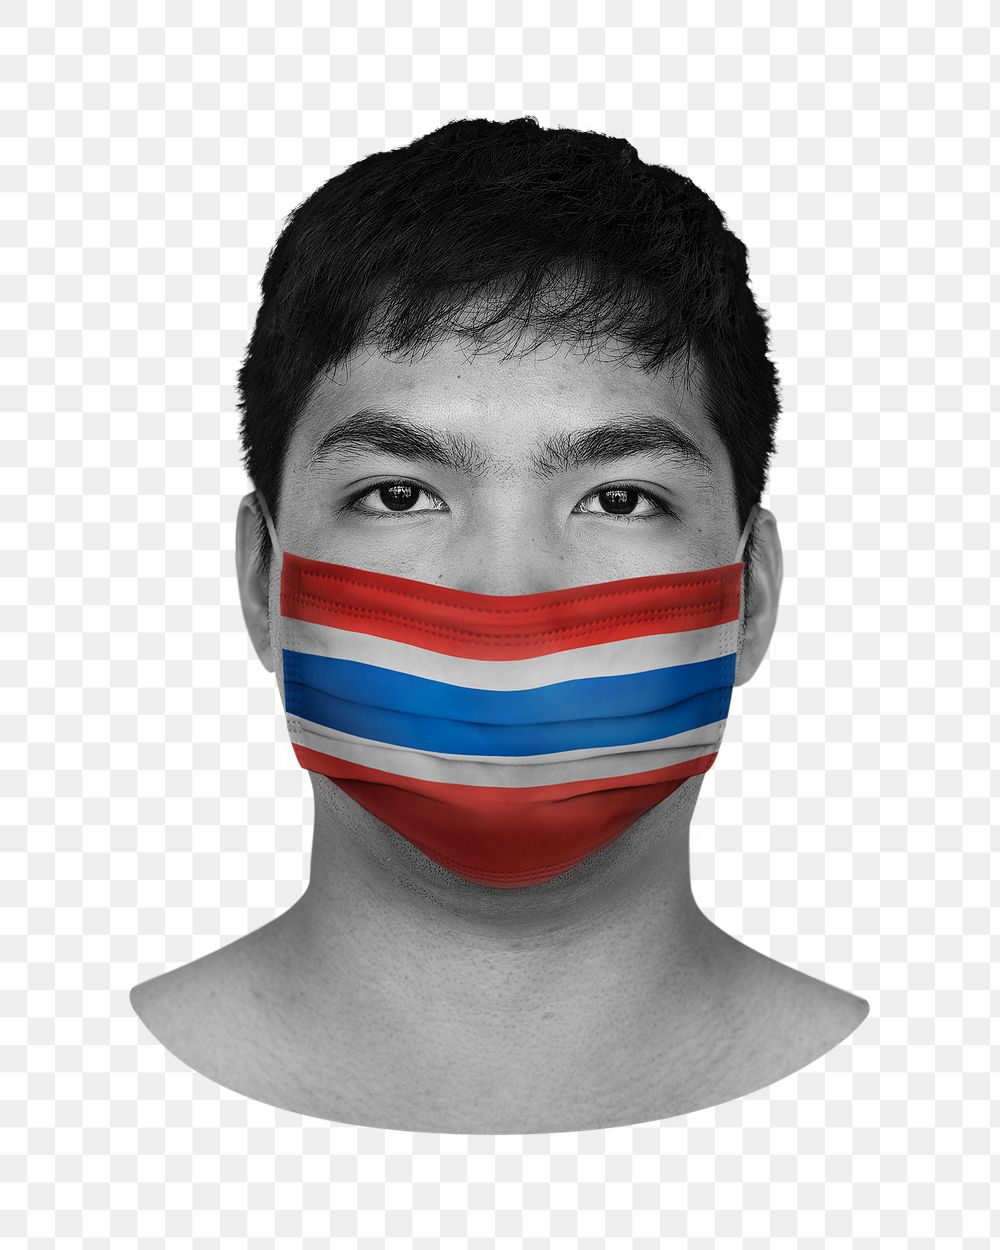 Png Thai man portrait, flag image on transparent background